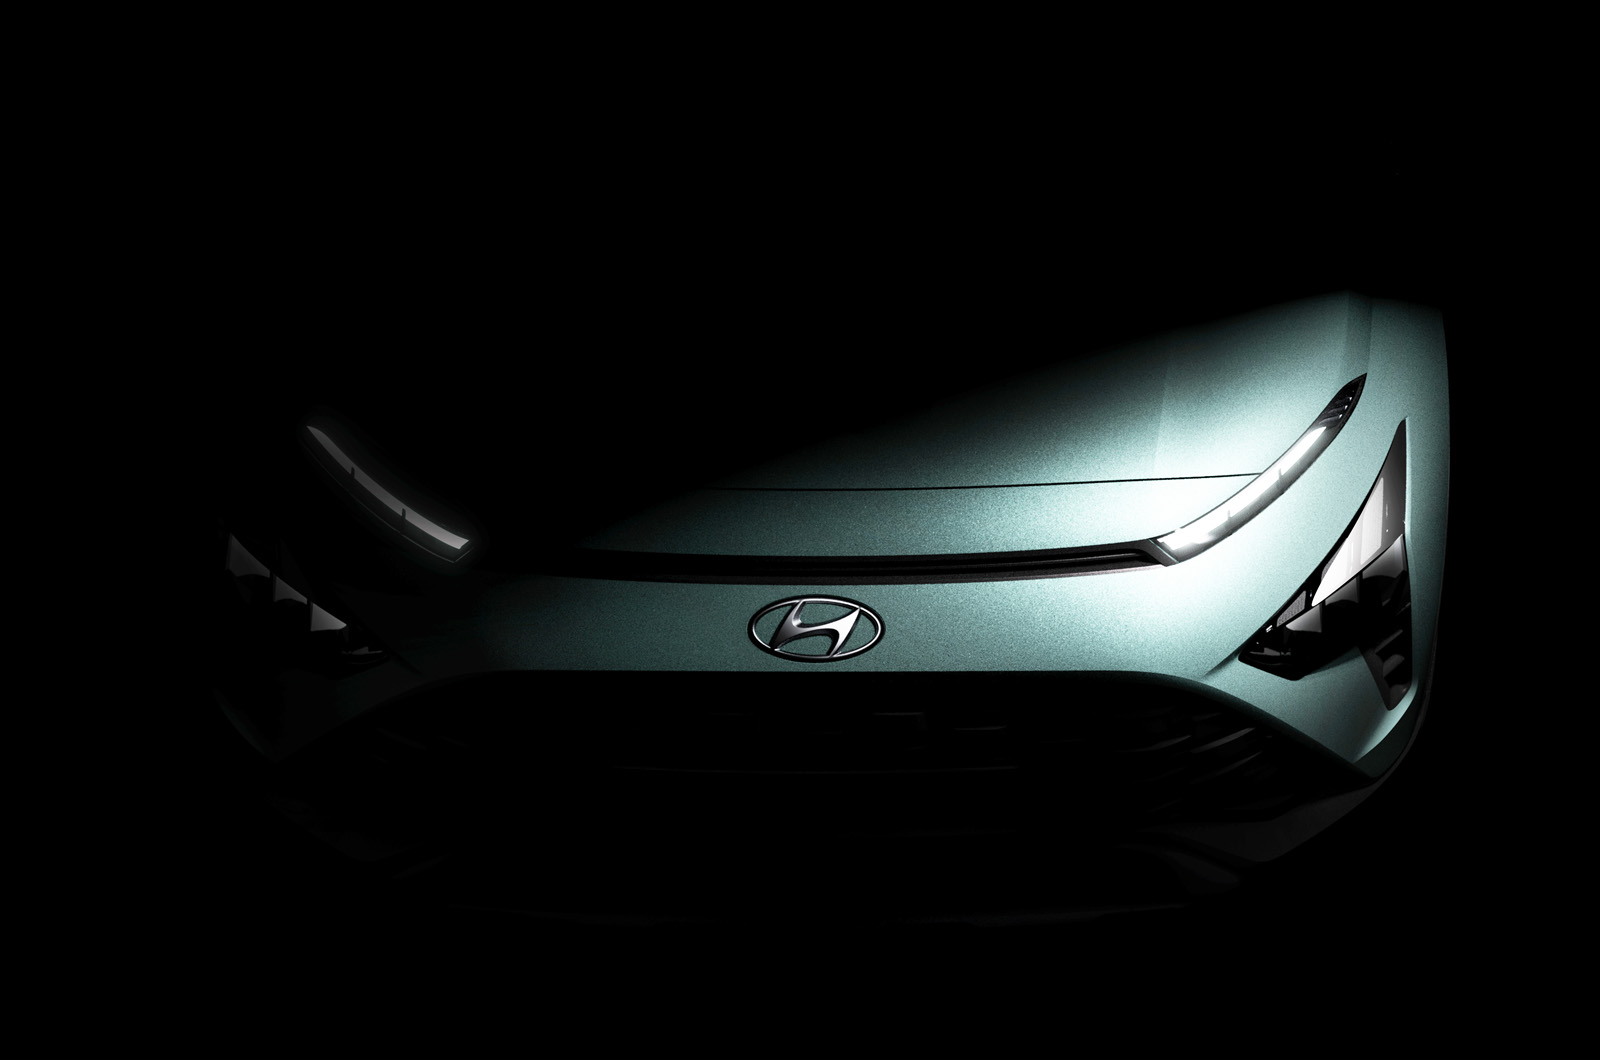 New 2021 Hyundai Bayon crossover to be revealed tomorrow